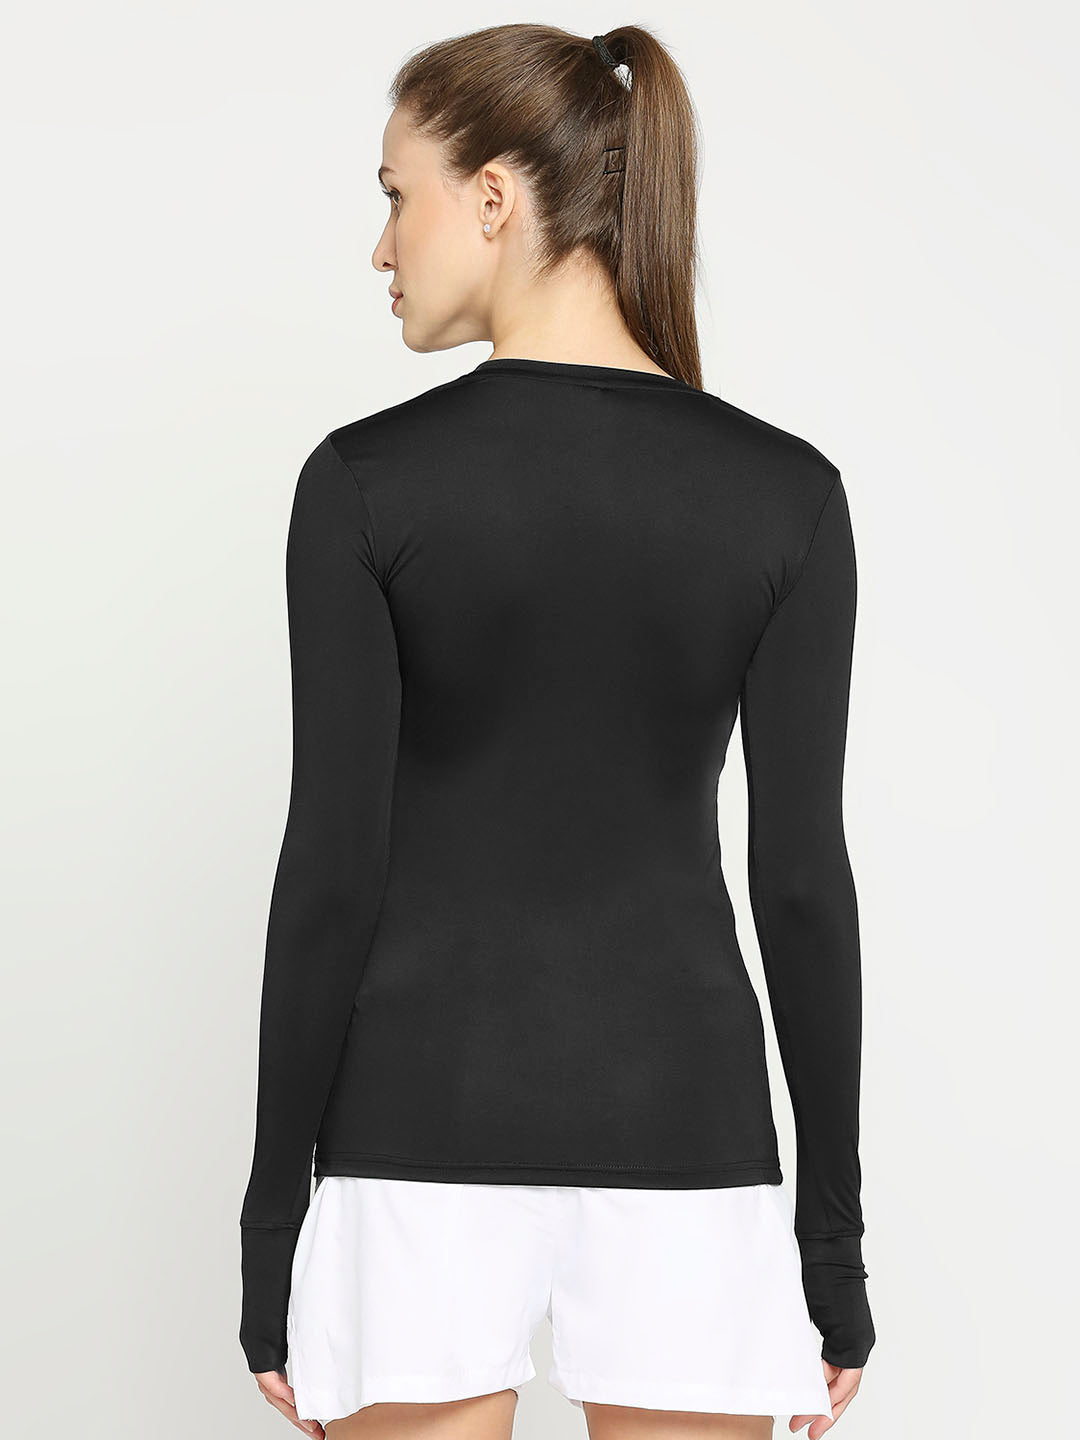 Women's Black Long Sleeve Sports T-Shirt - Stay Stylish and